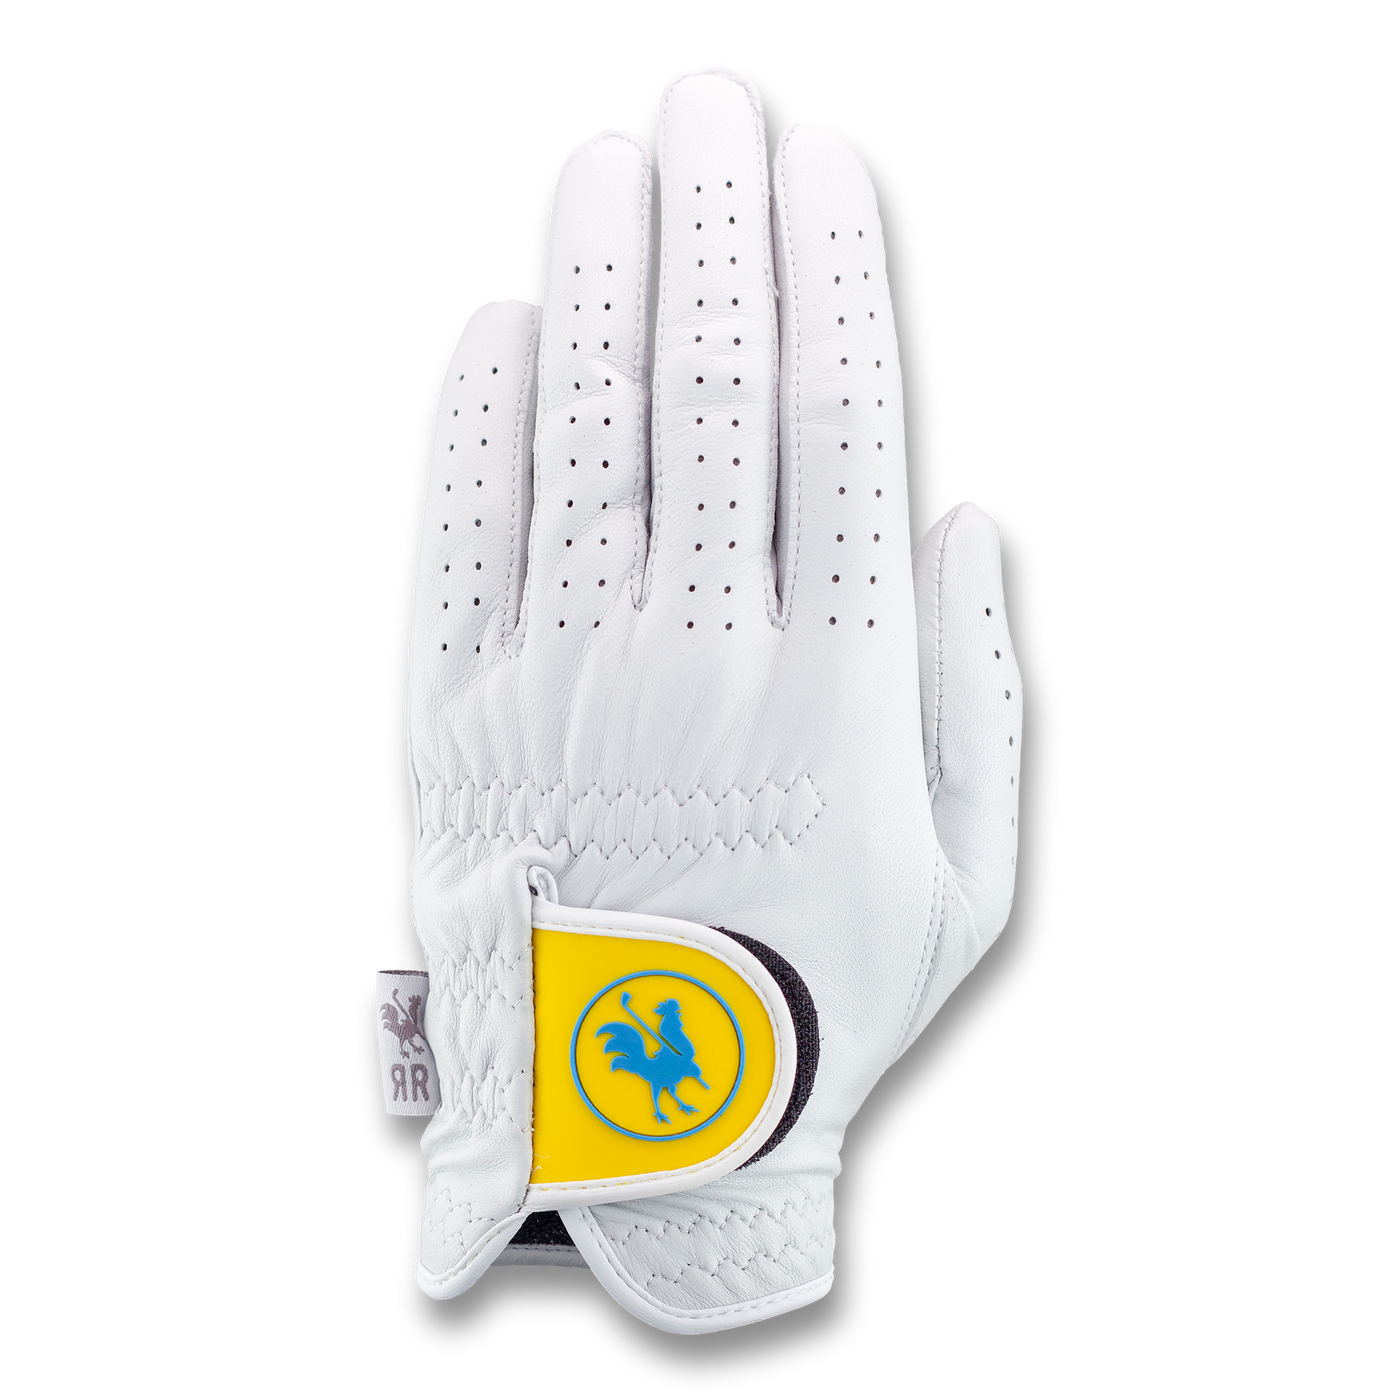 The Sunnyside left hand golf glove